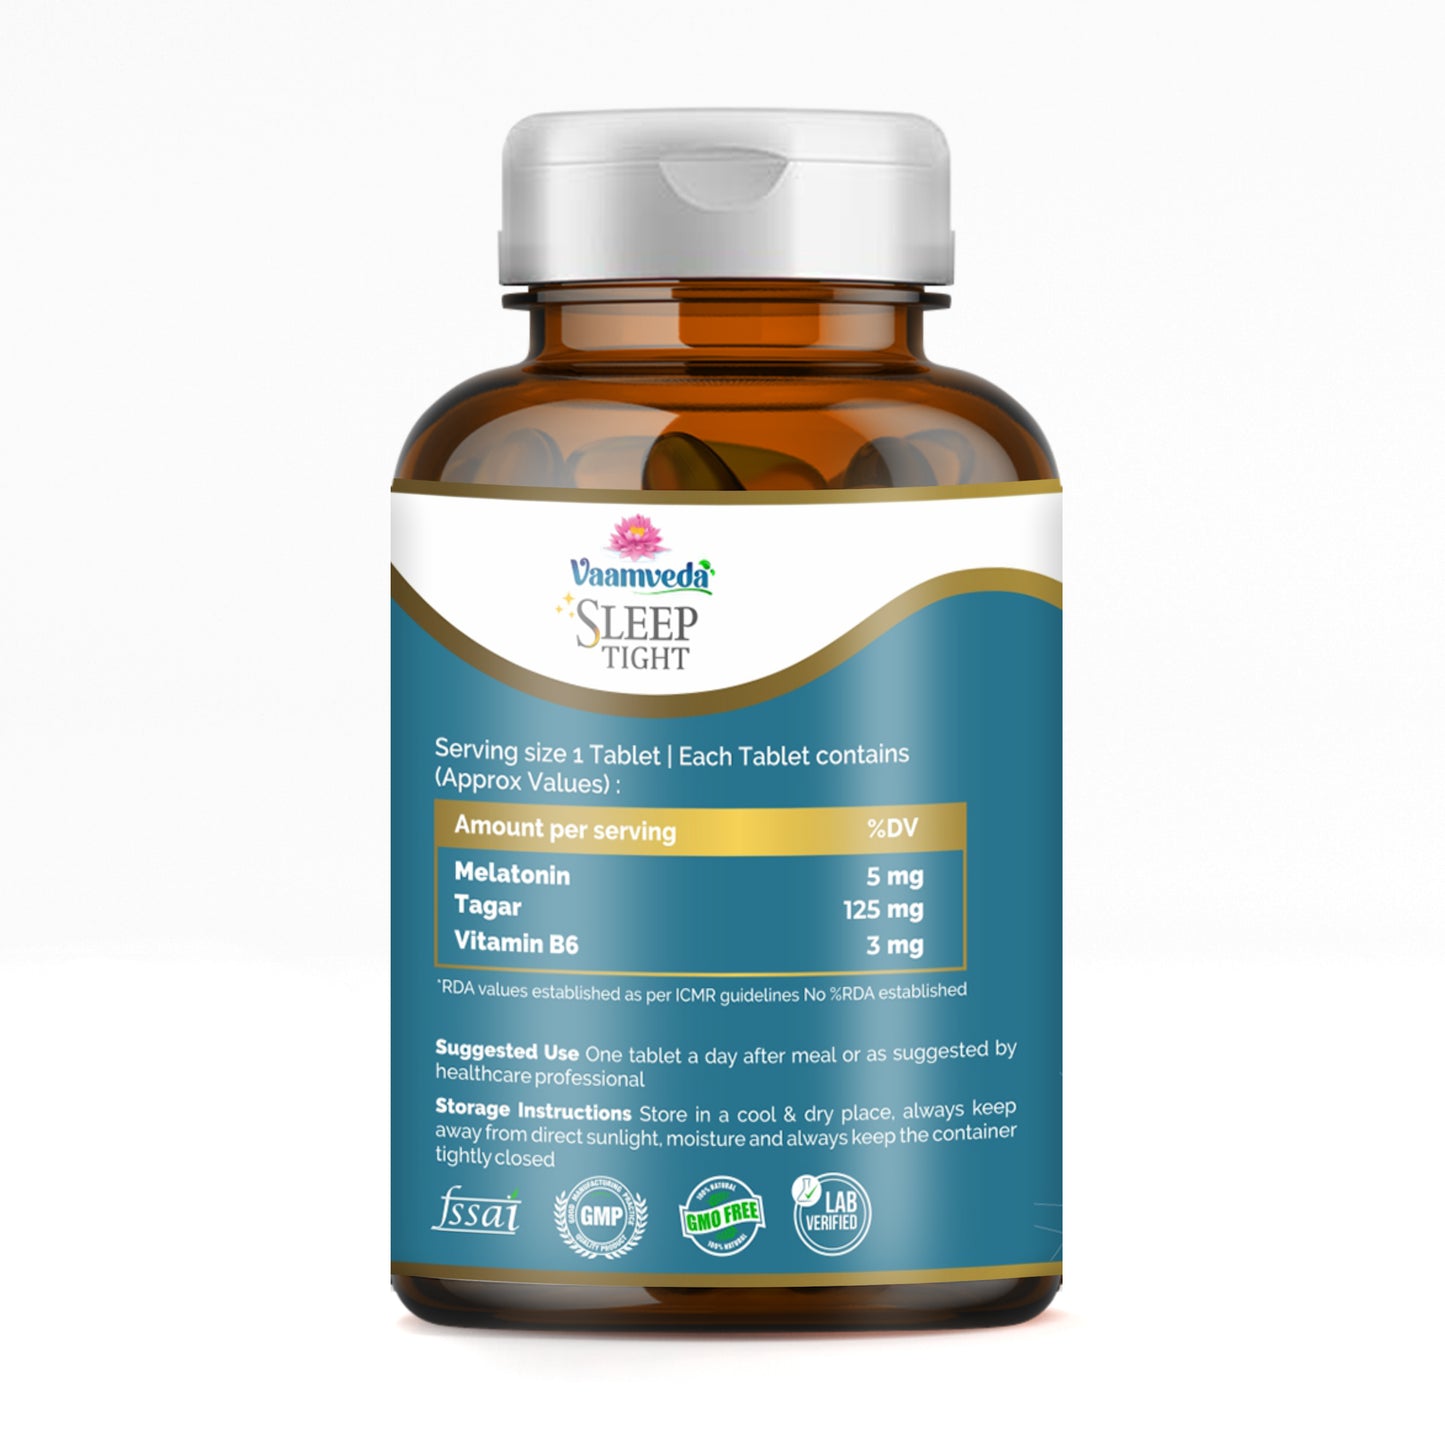 Melatonin with Tagara & Vitamin B6 Natural Sleeping Aid Tablets